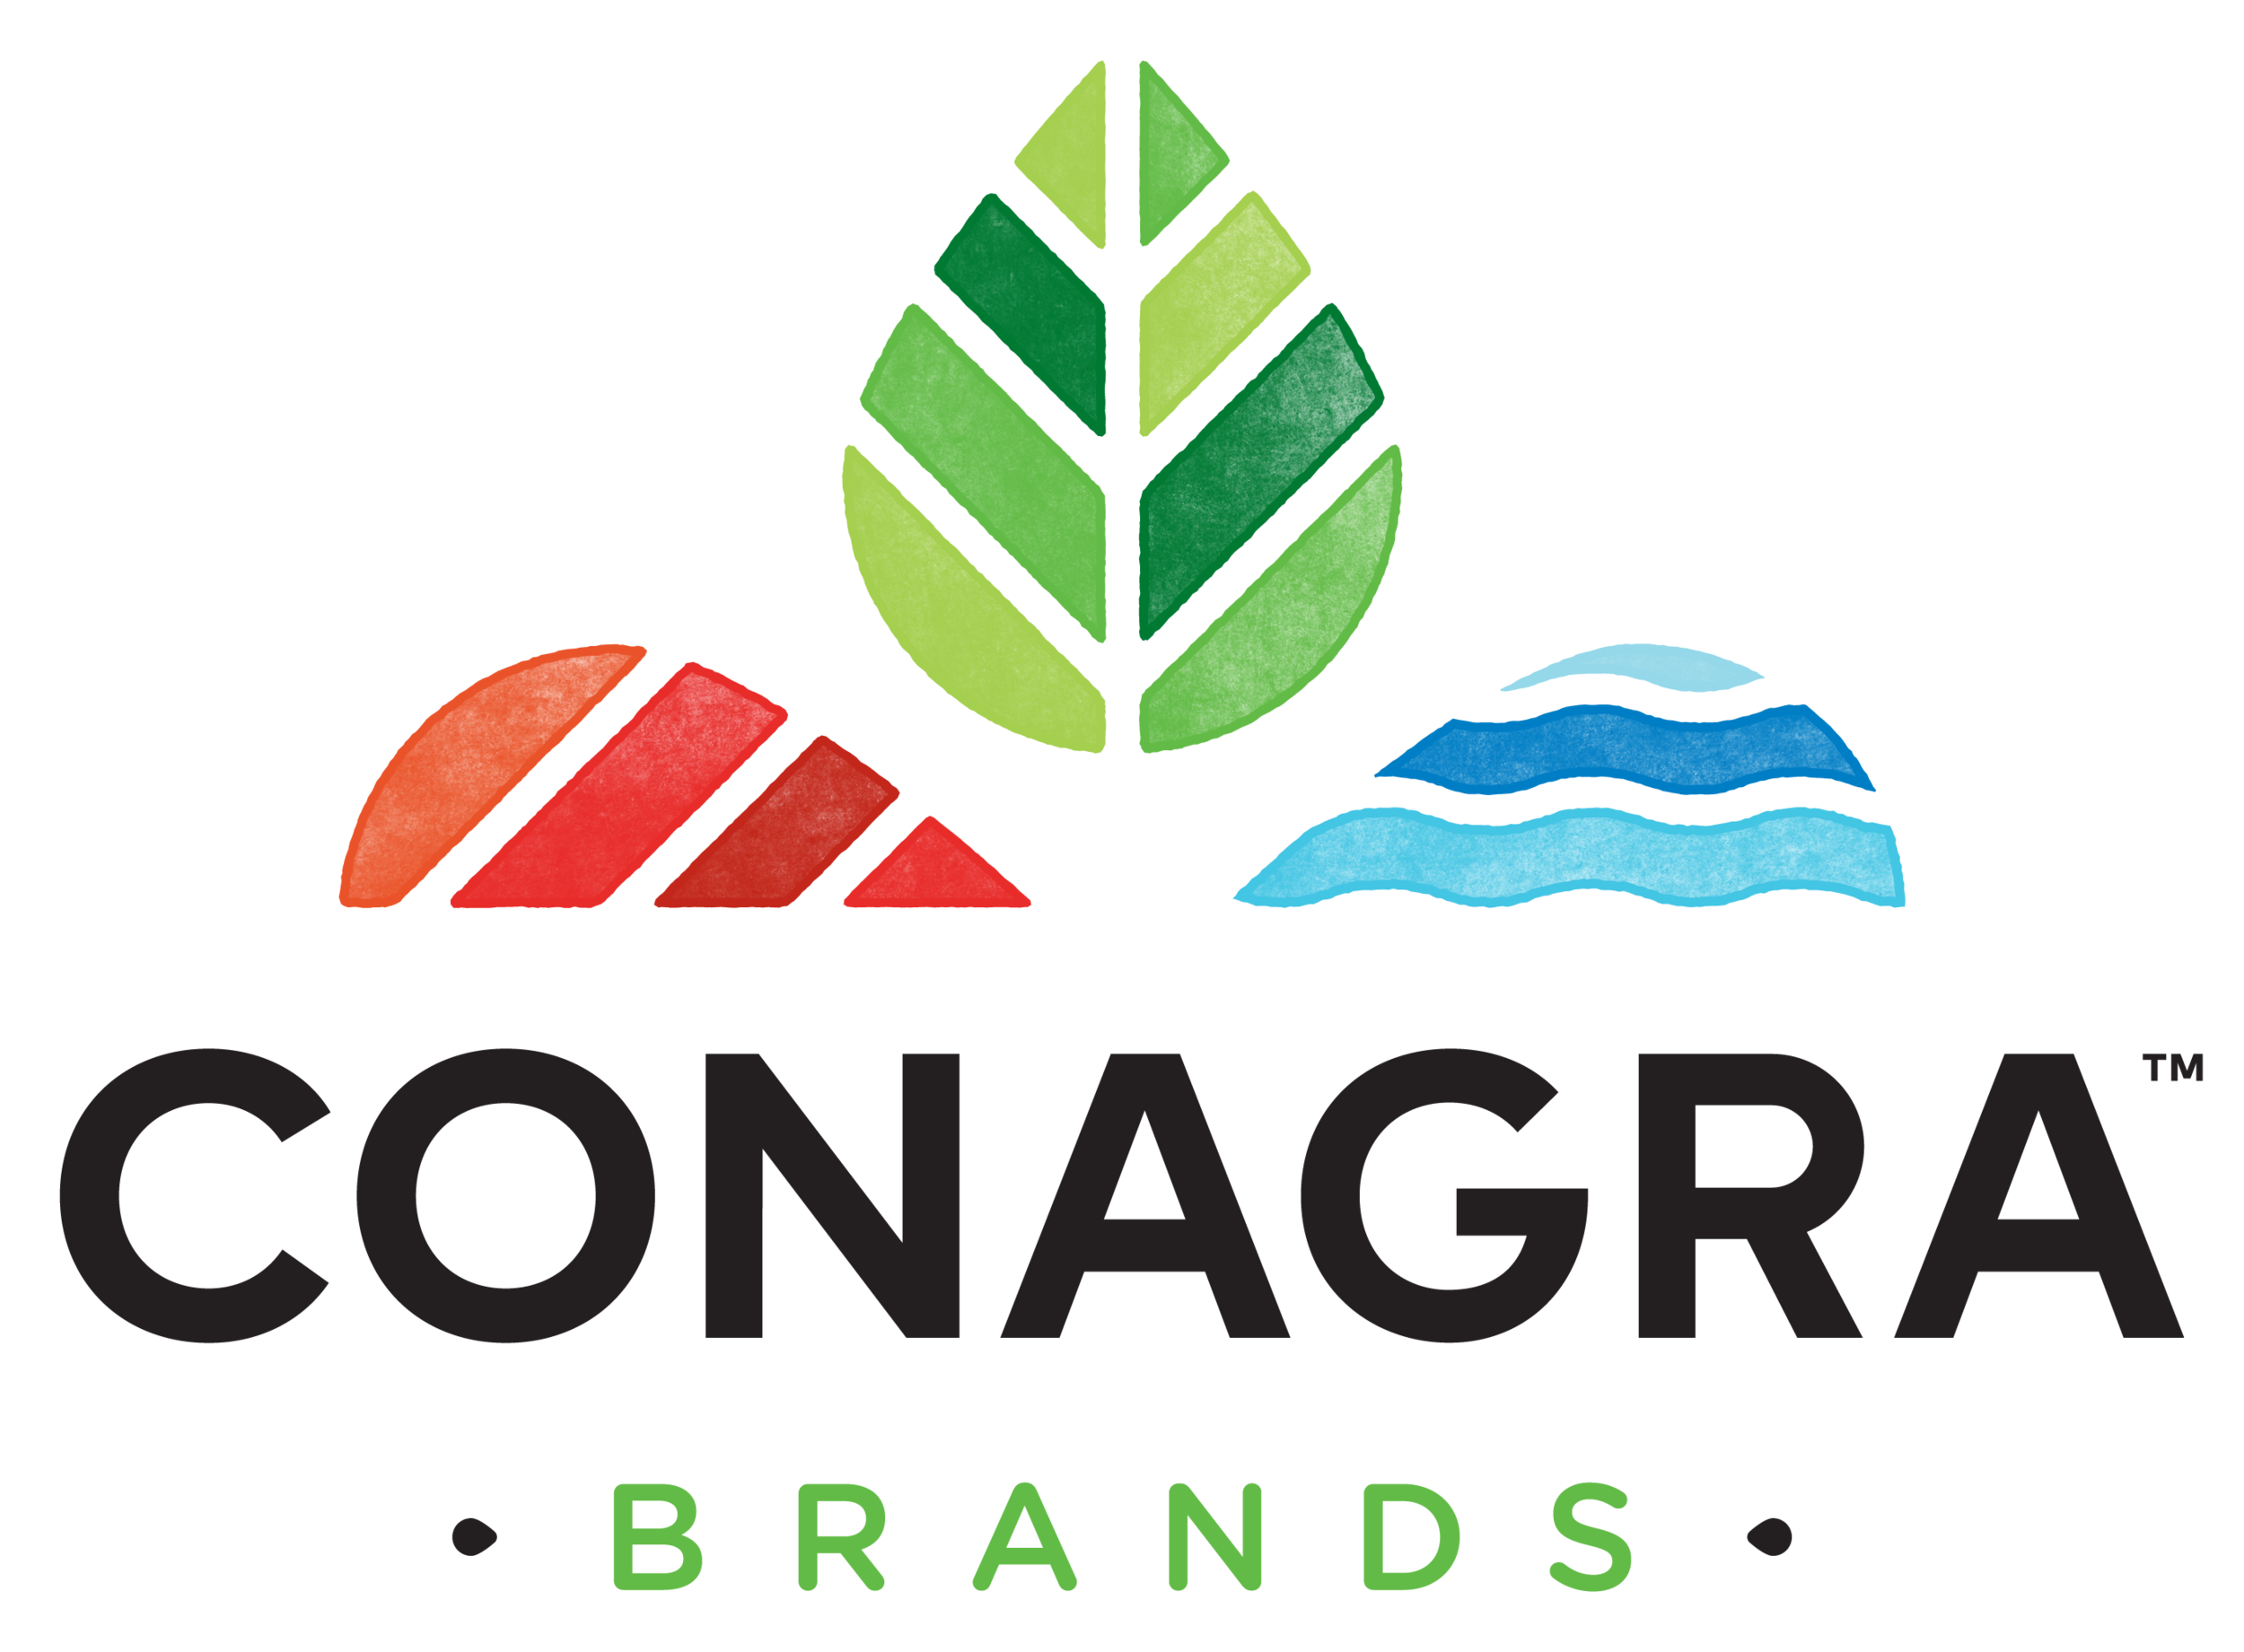 Conagra_Brands-black-logo.png